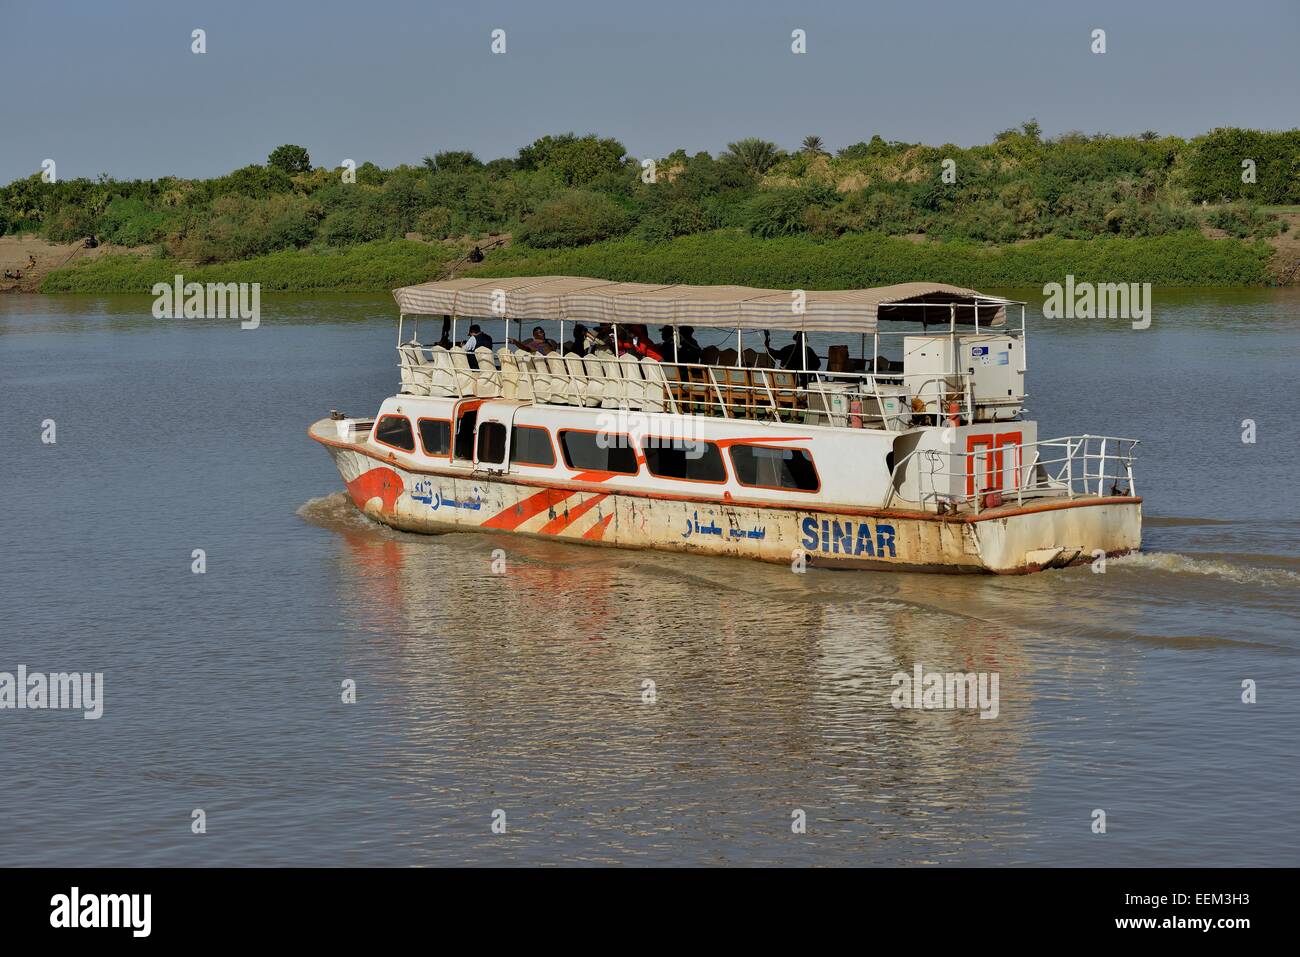 Ausflugsschiff auf dem Nil, Kharthoum, Sudan Stockfoto